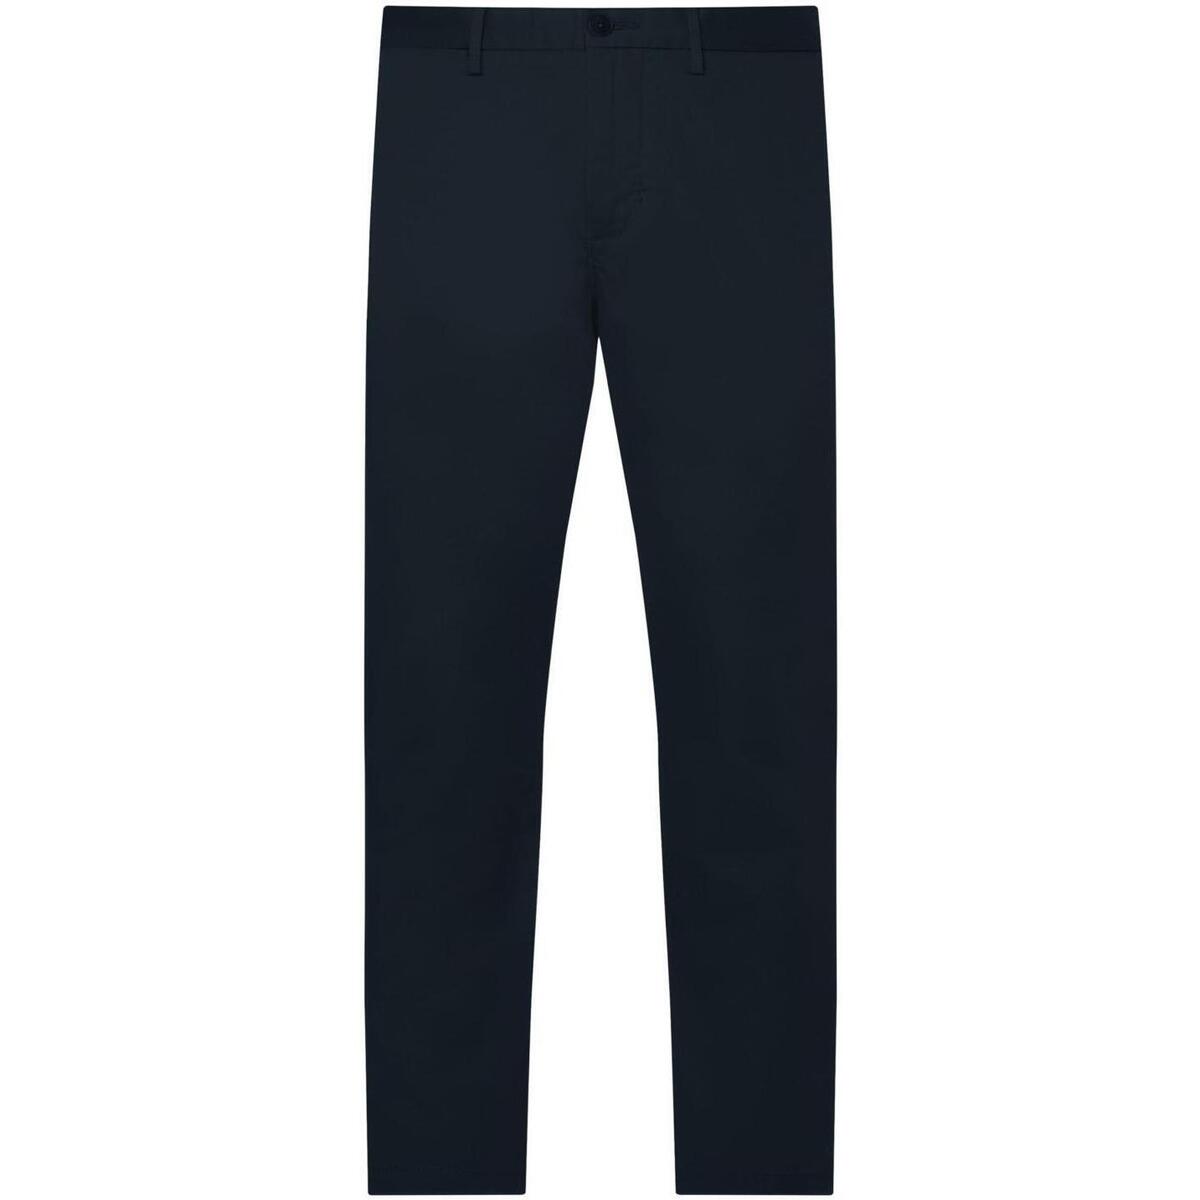 Textiel Heren Broeken / Pantalons Tommy Hilfiger  Blauw